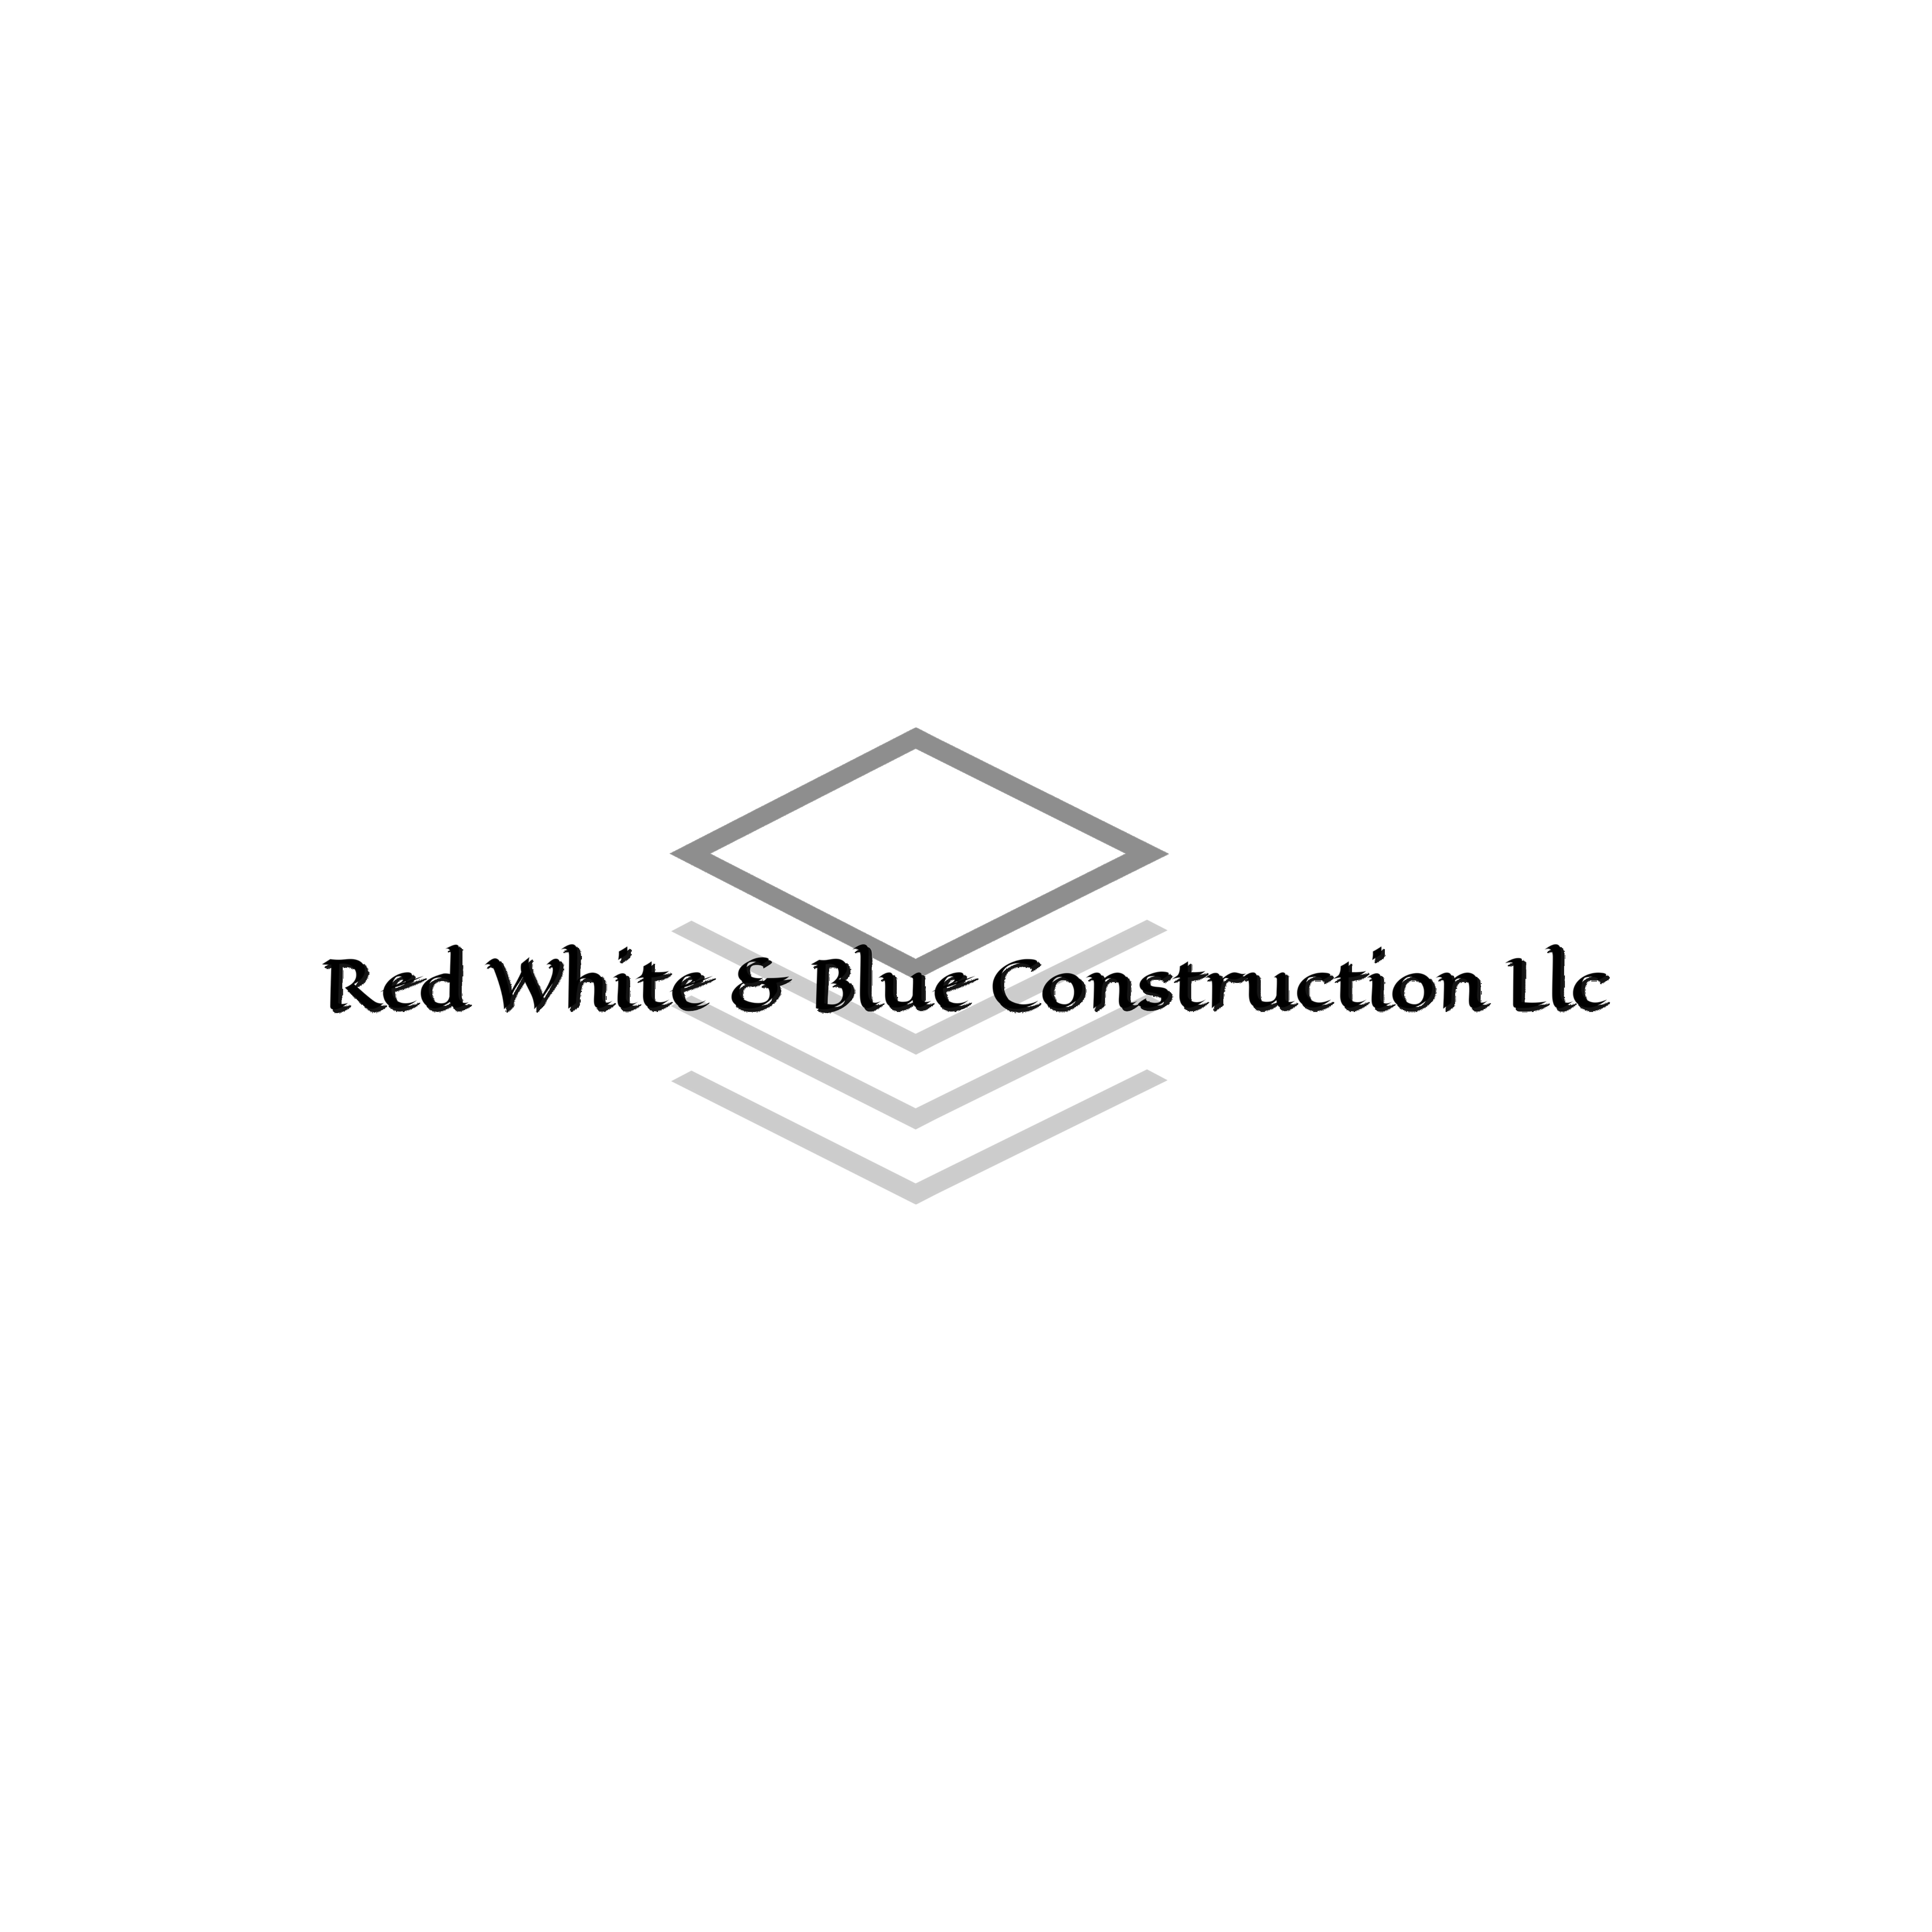 Red White & Blue Construction, LLC Logo